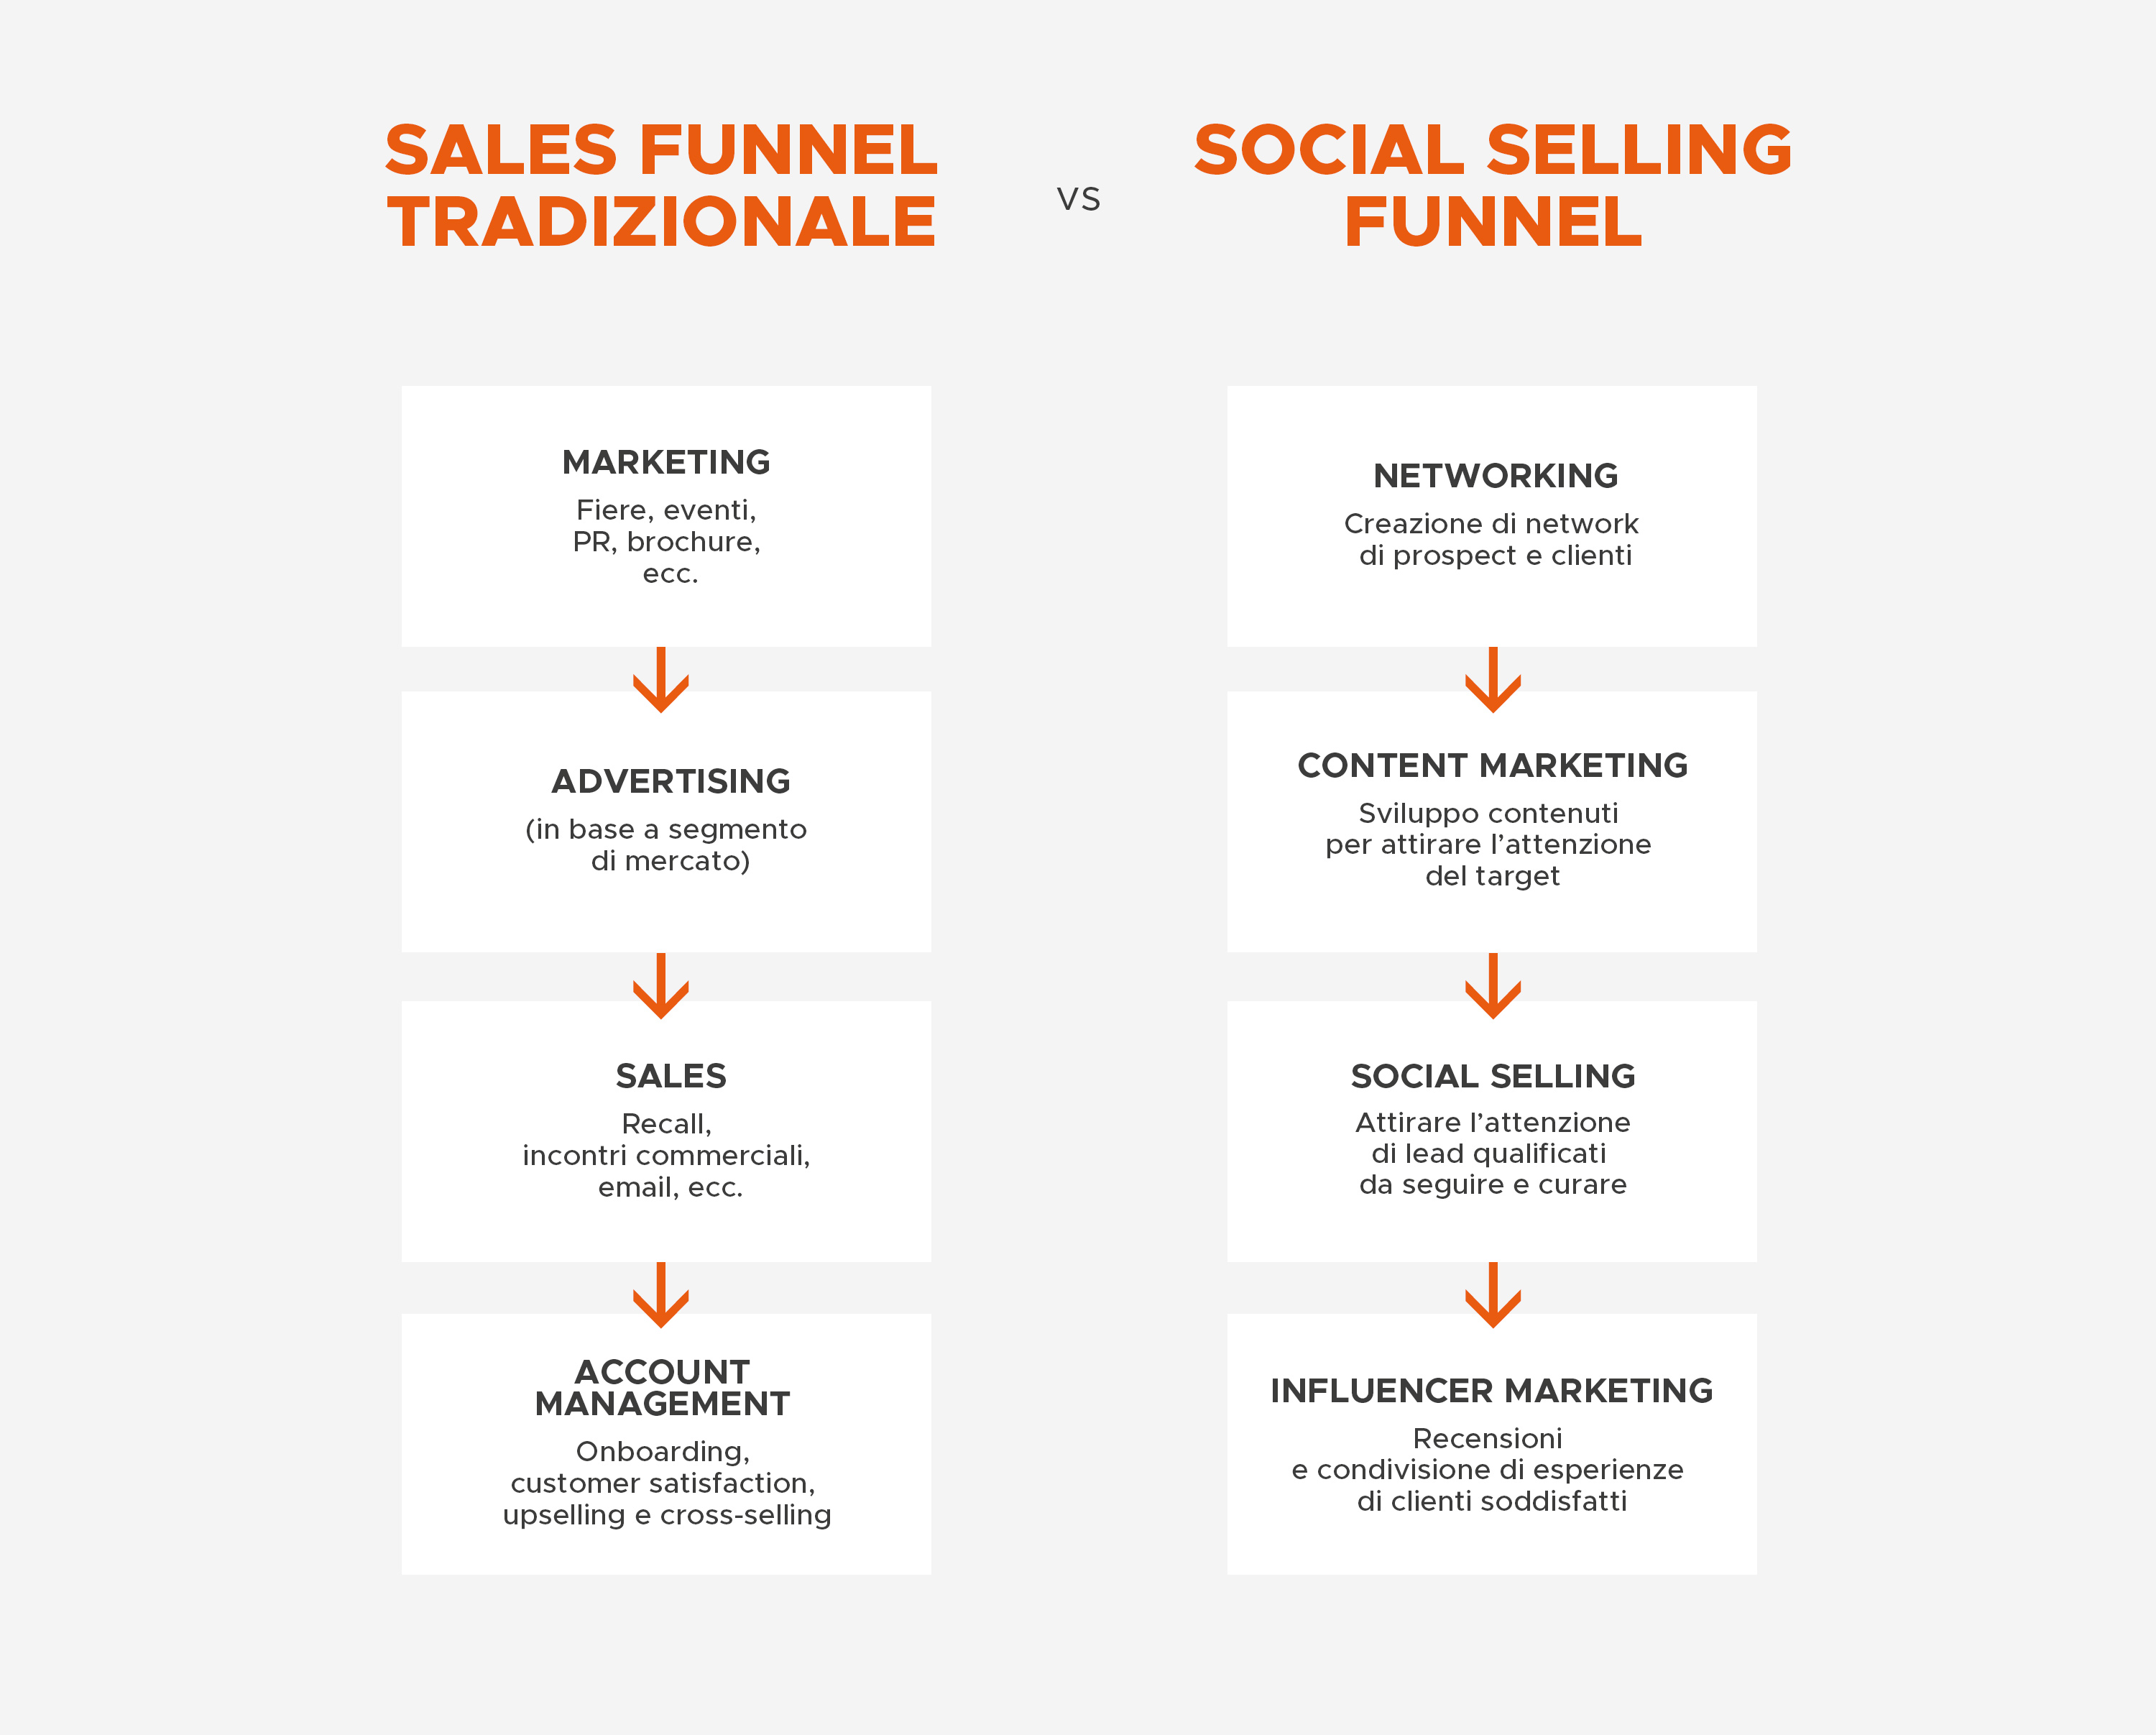 Social Selling Funnel vs Traditional Funnel